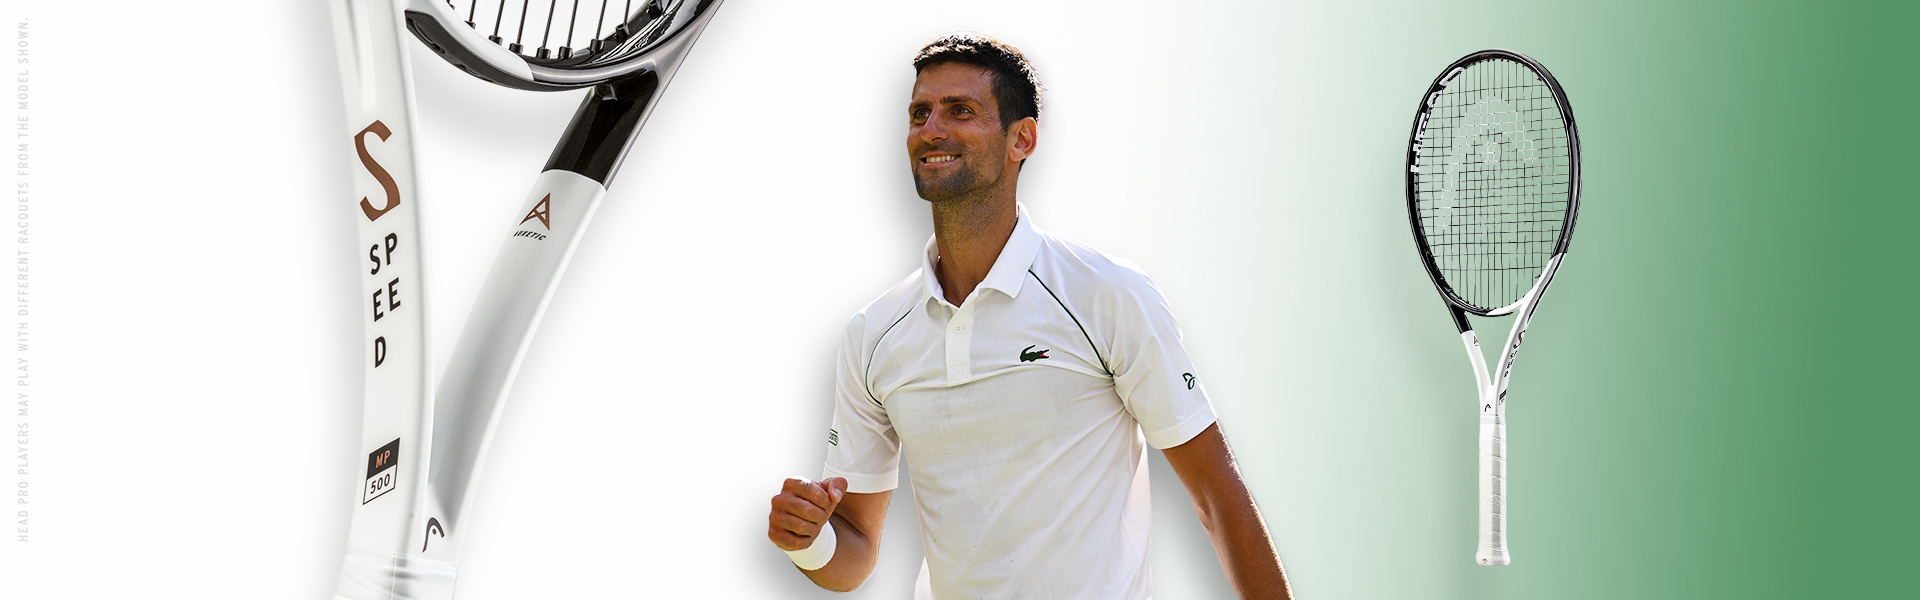 Djokovic heads the HEAD Champions at Wimbledon